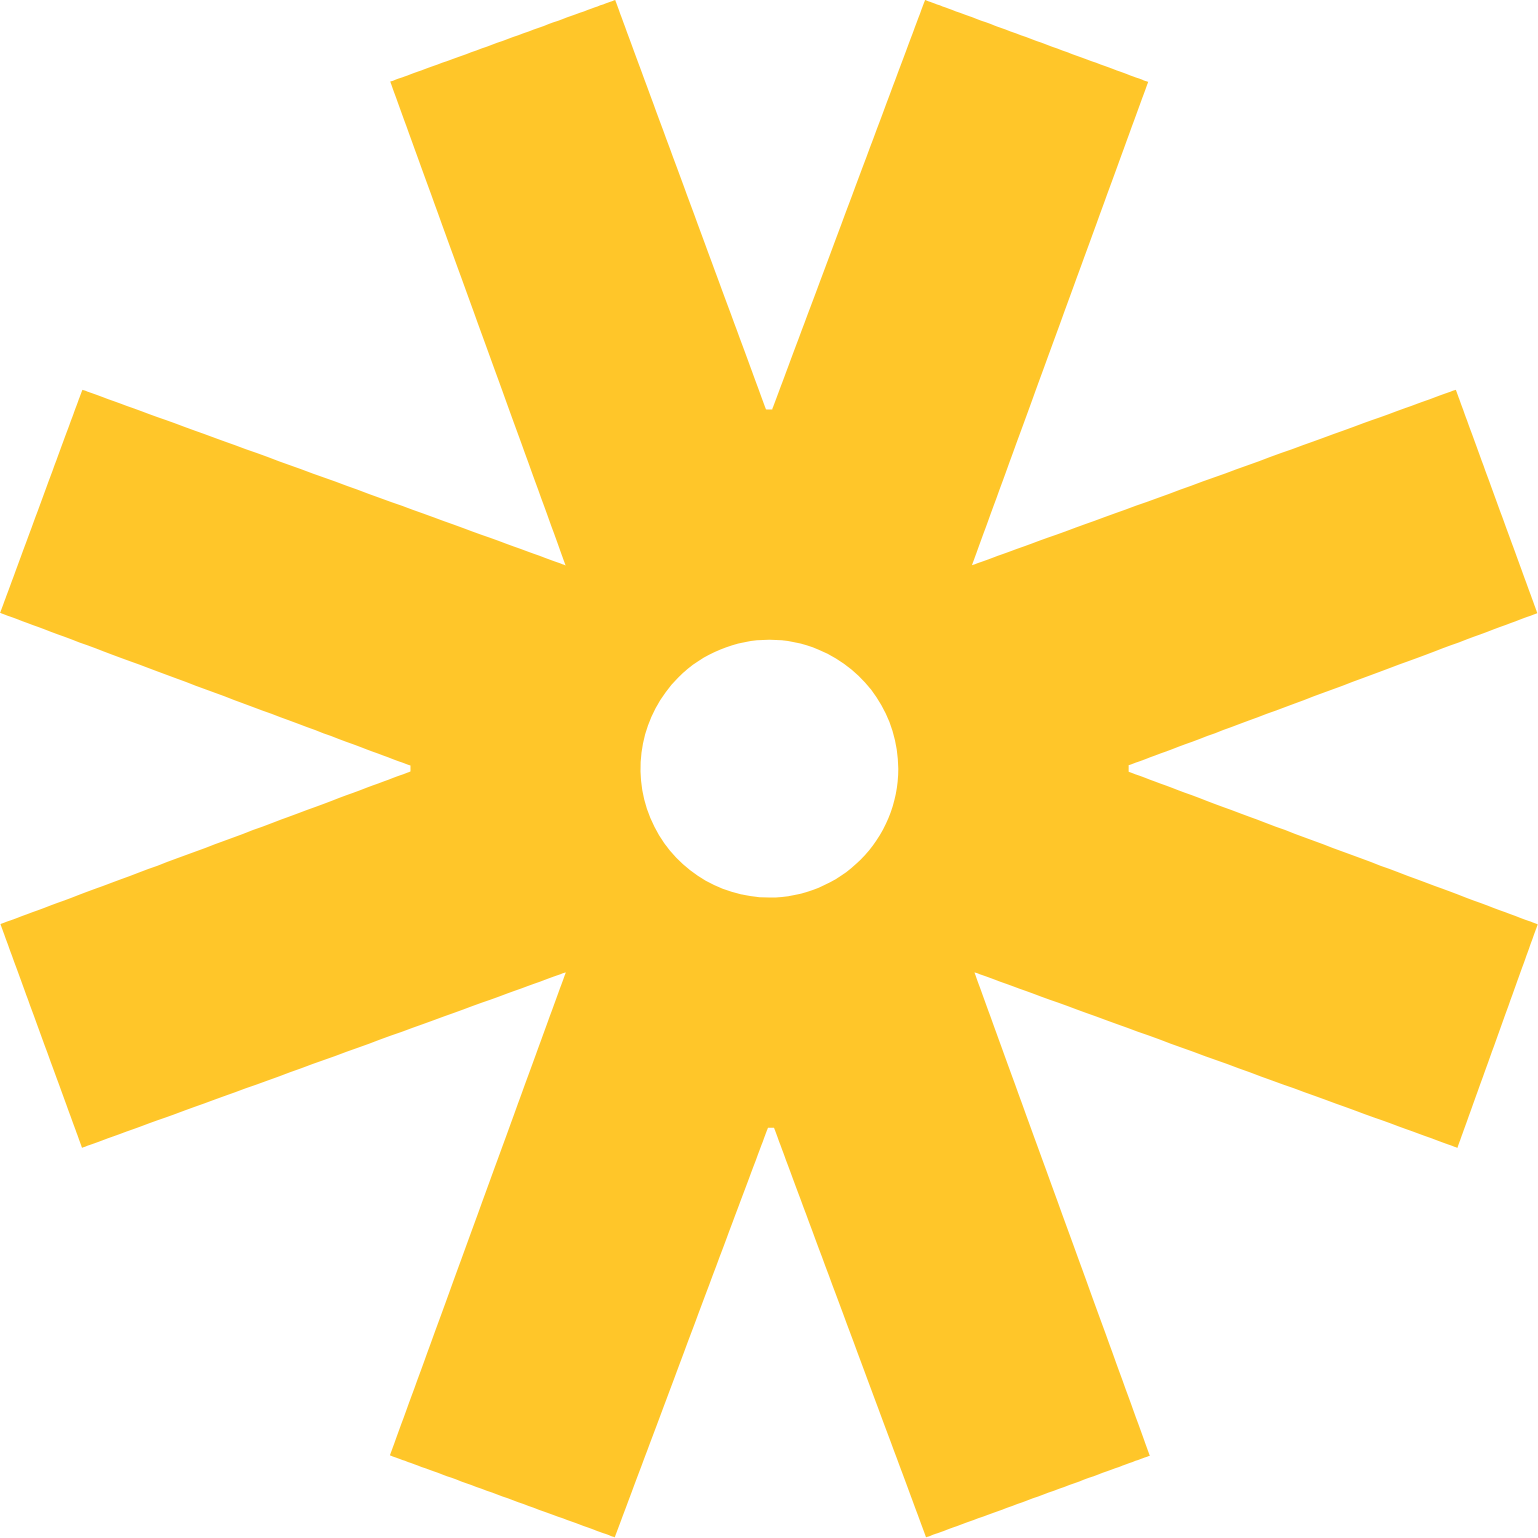 Vitru logo (transparent PNG)